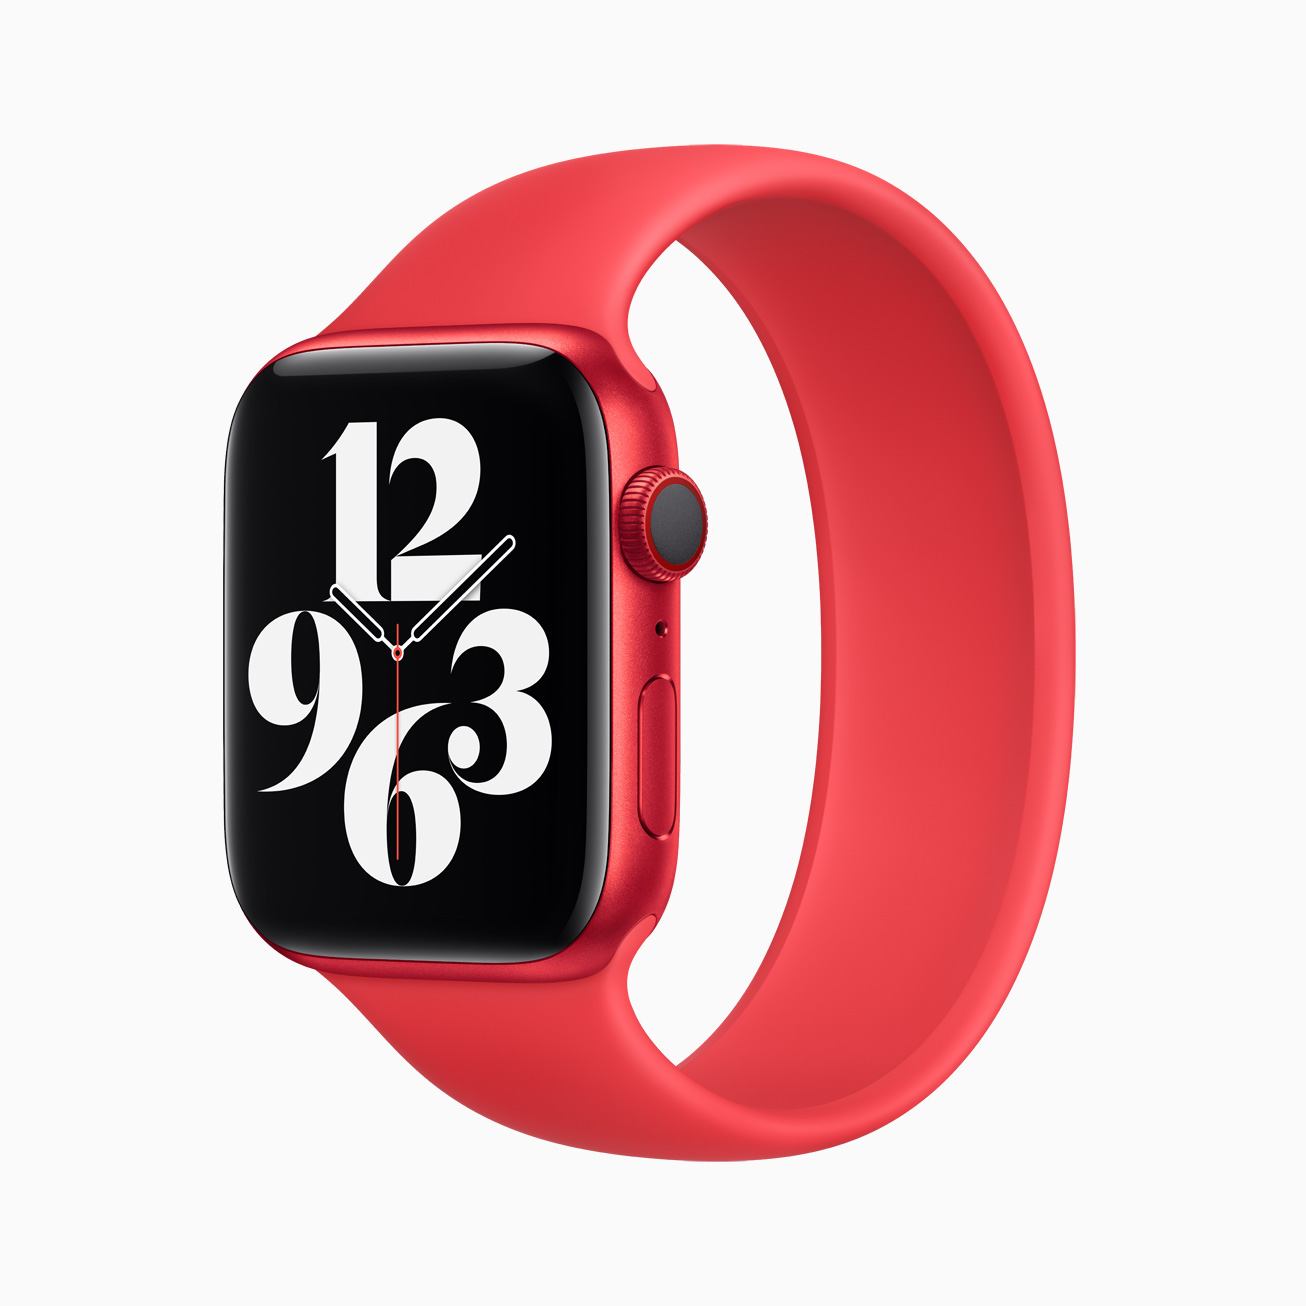 Apple watch series 6 aluminum red case 09152020